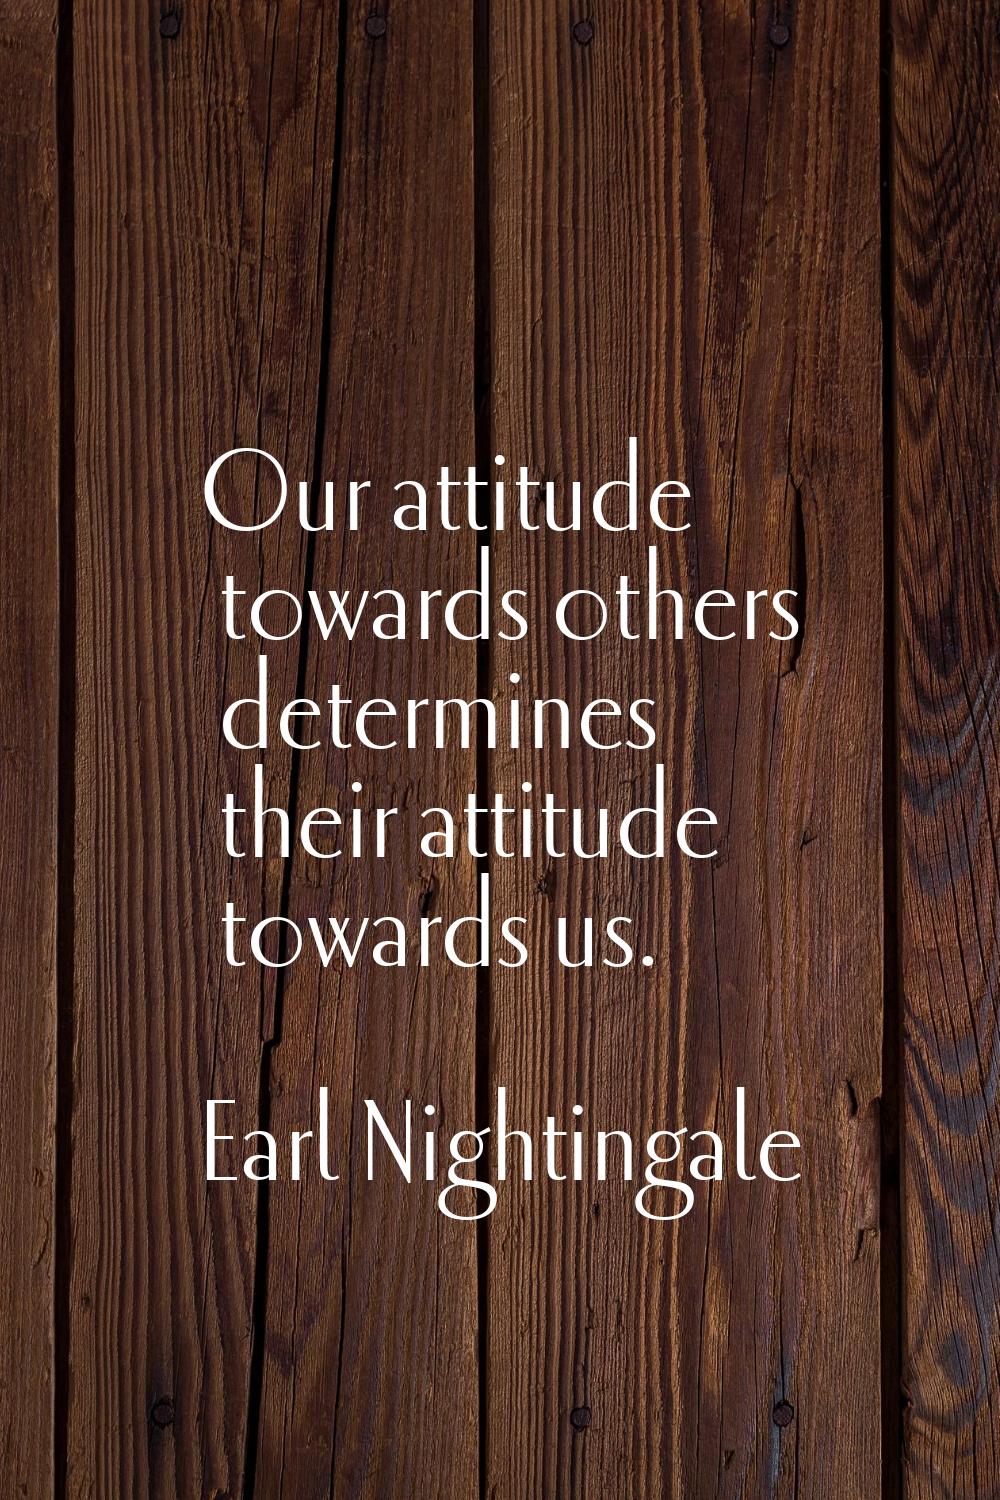 Our attitude towards others determines their attitude towards us.